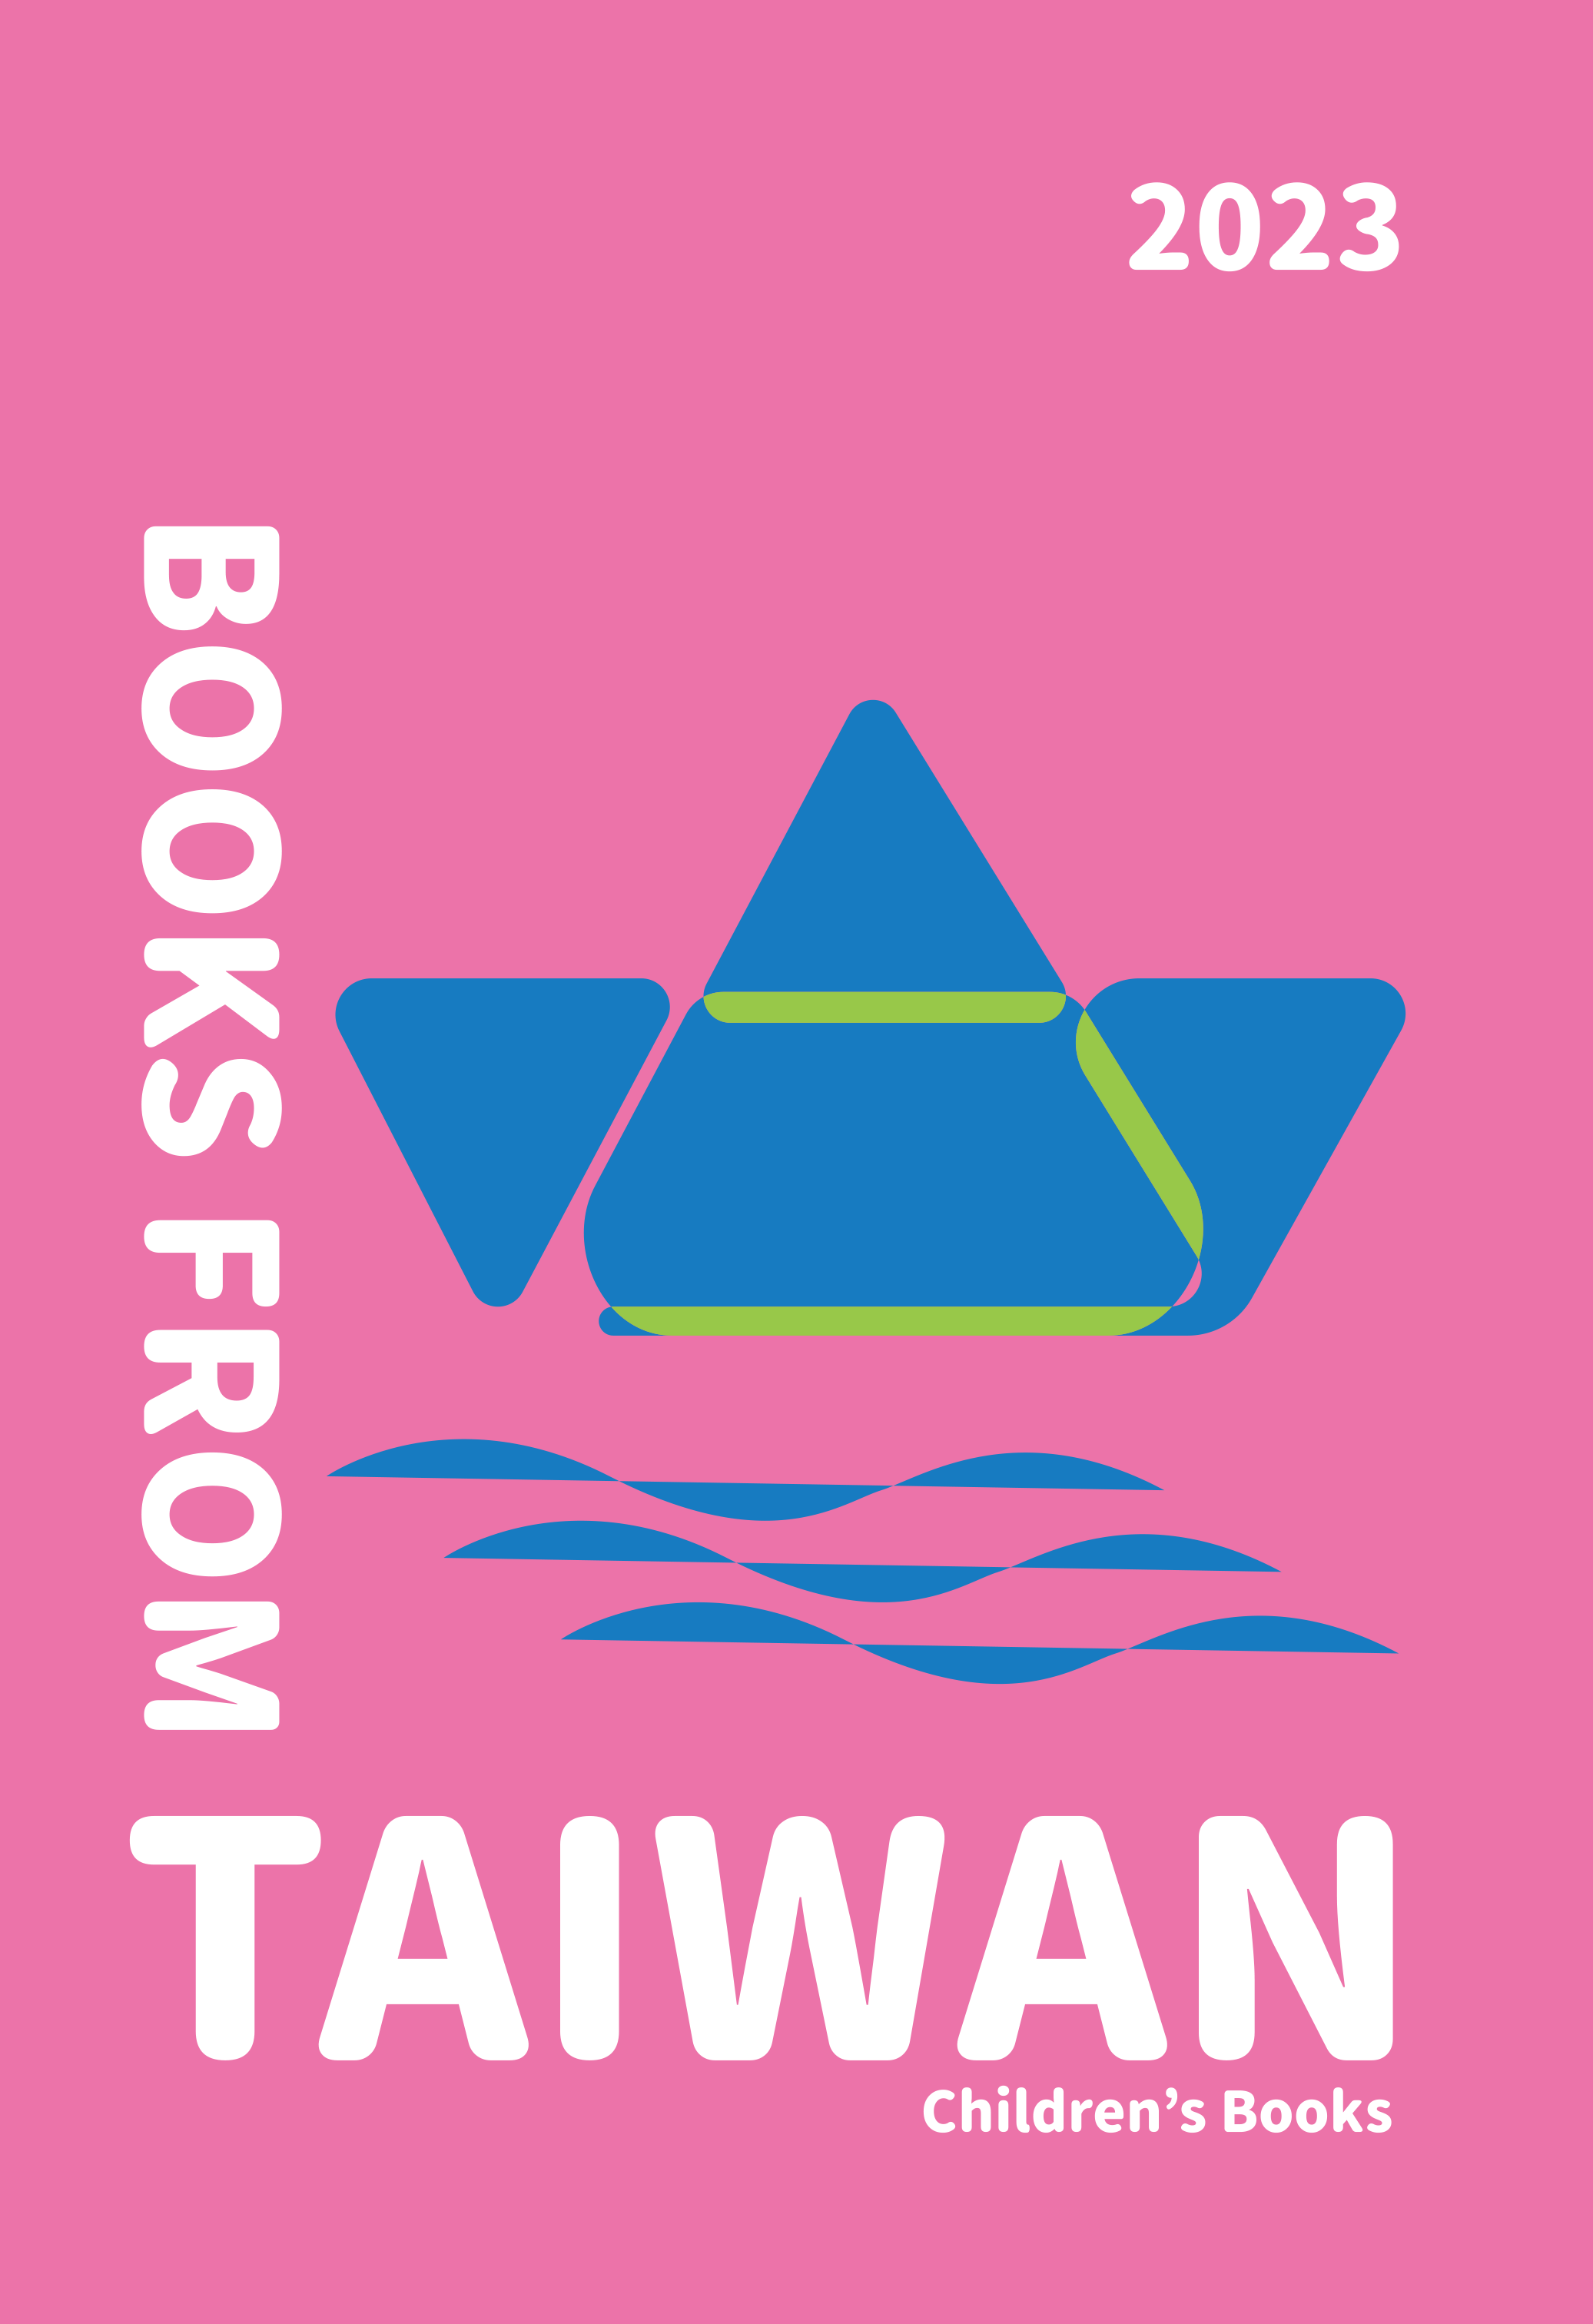 Books from Taiwan Children's Books 2023